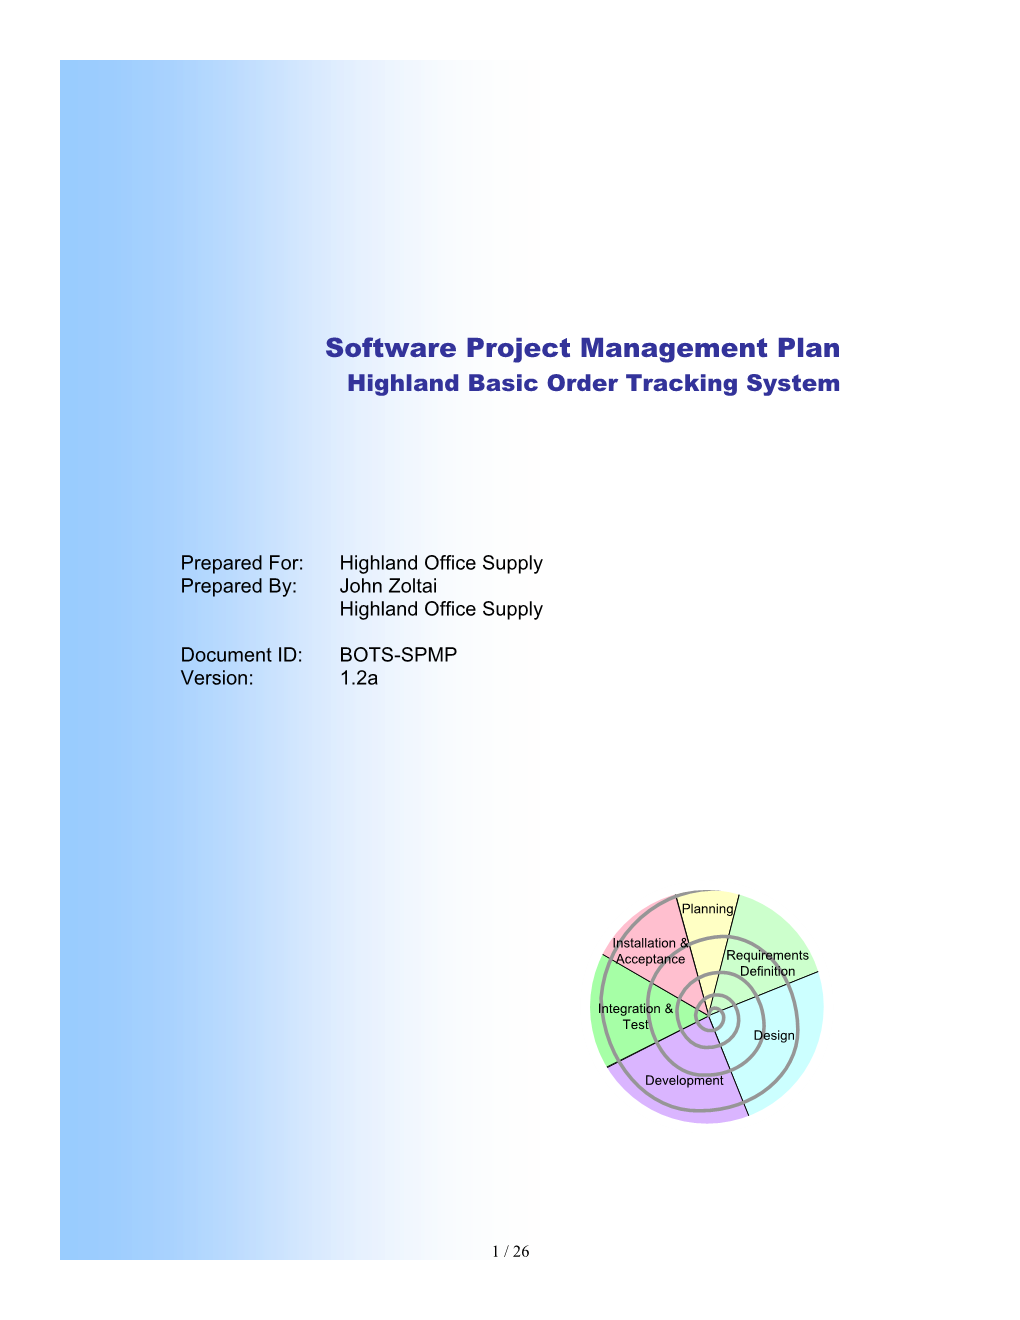 Software Project Management Plan Highland Basic Order Tracking System